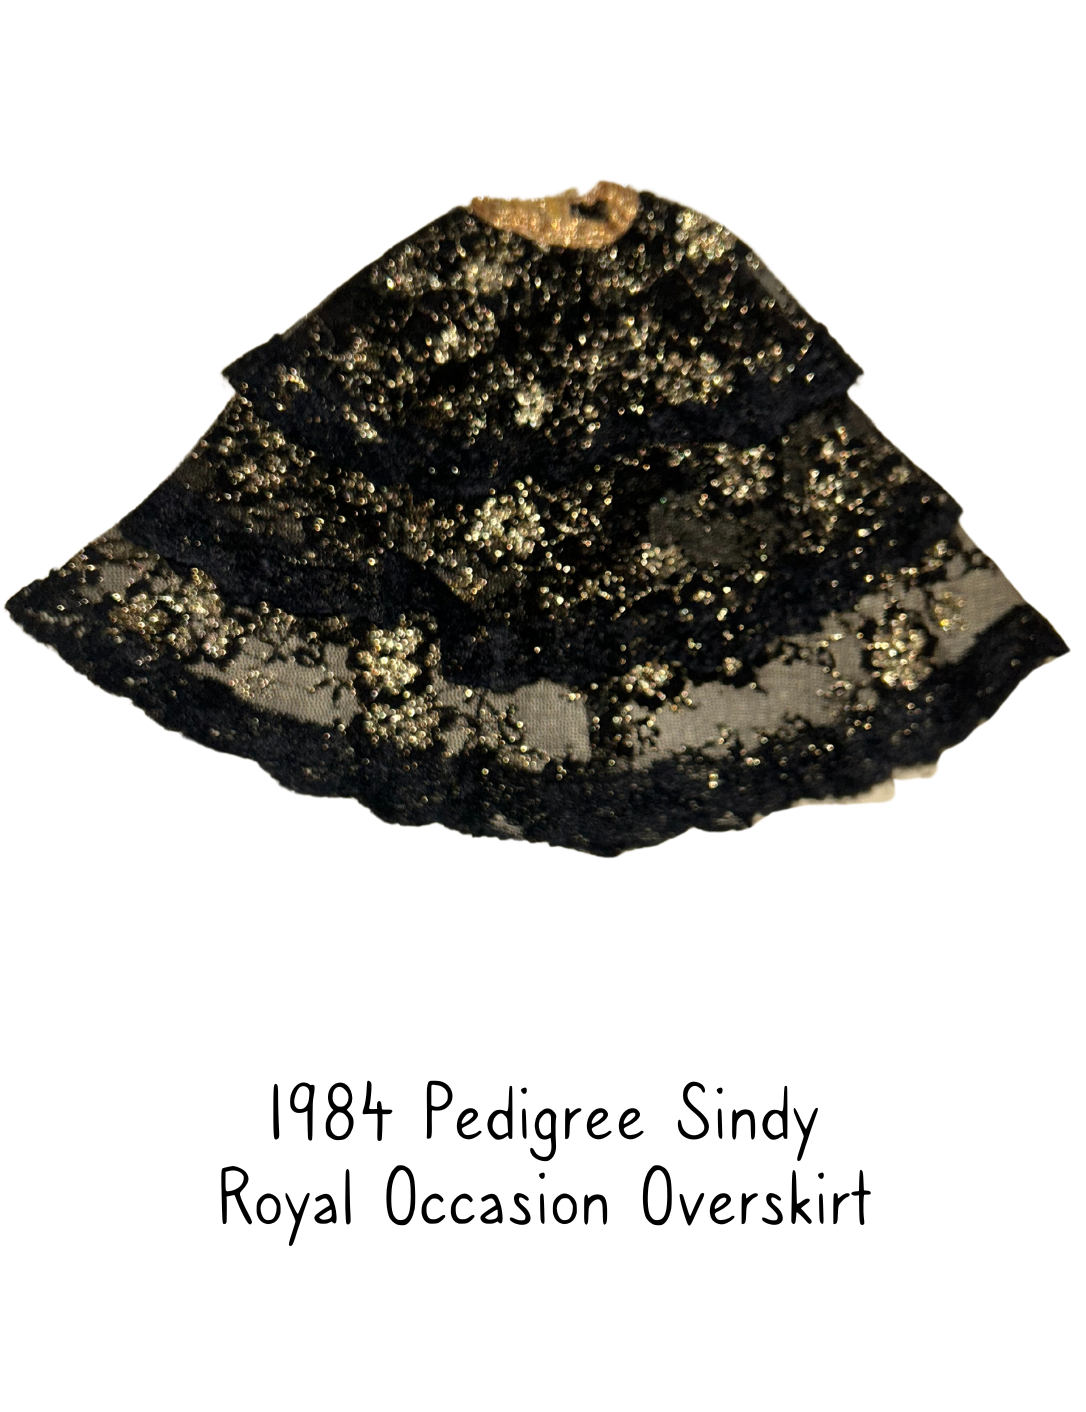 1984 Pedigree Sindy Royal Occasion Overskirt